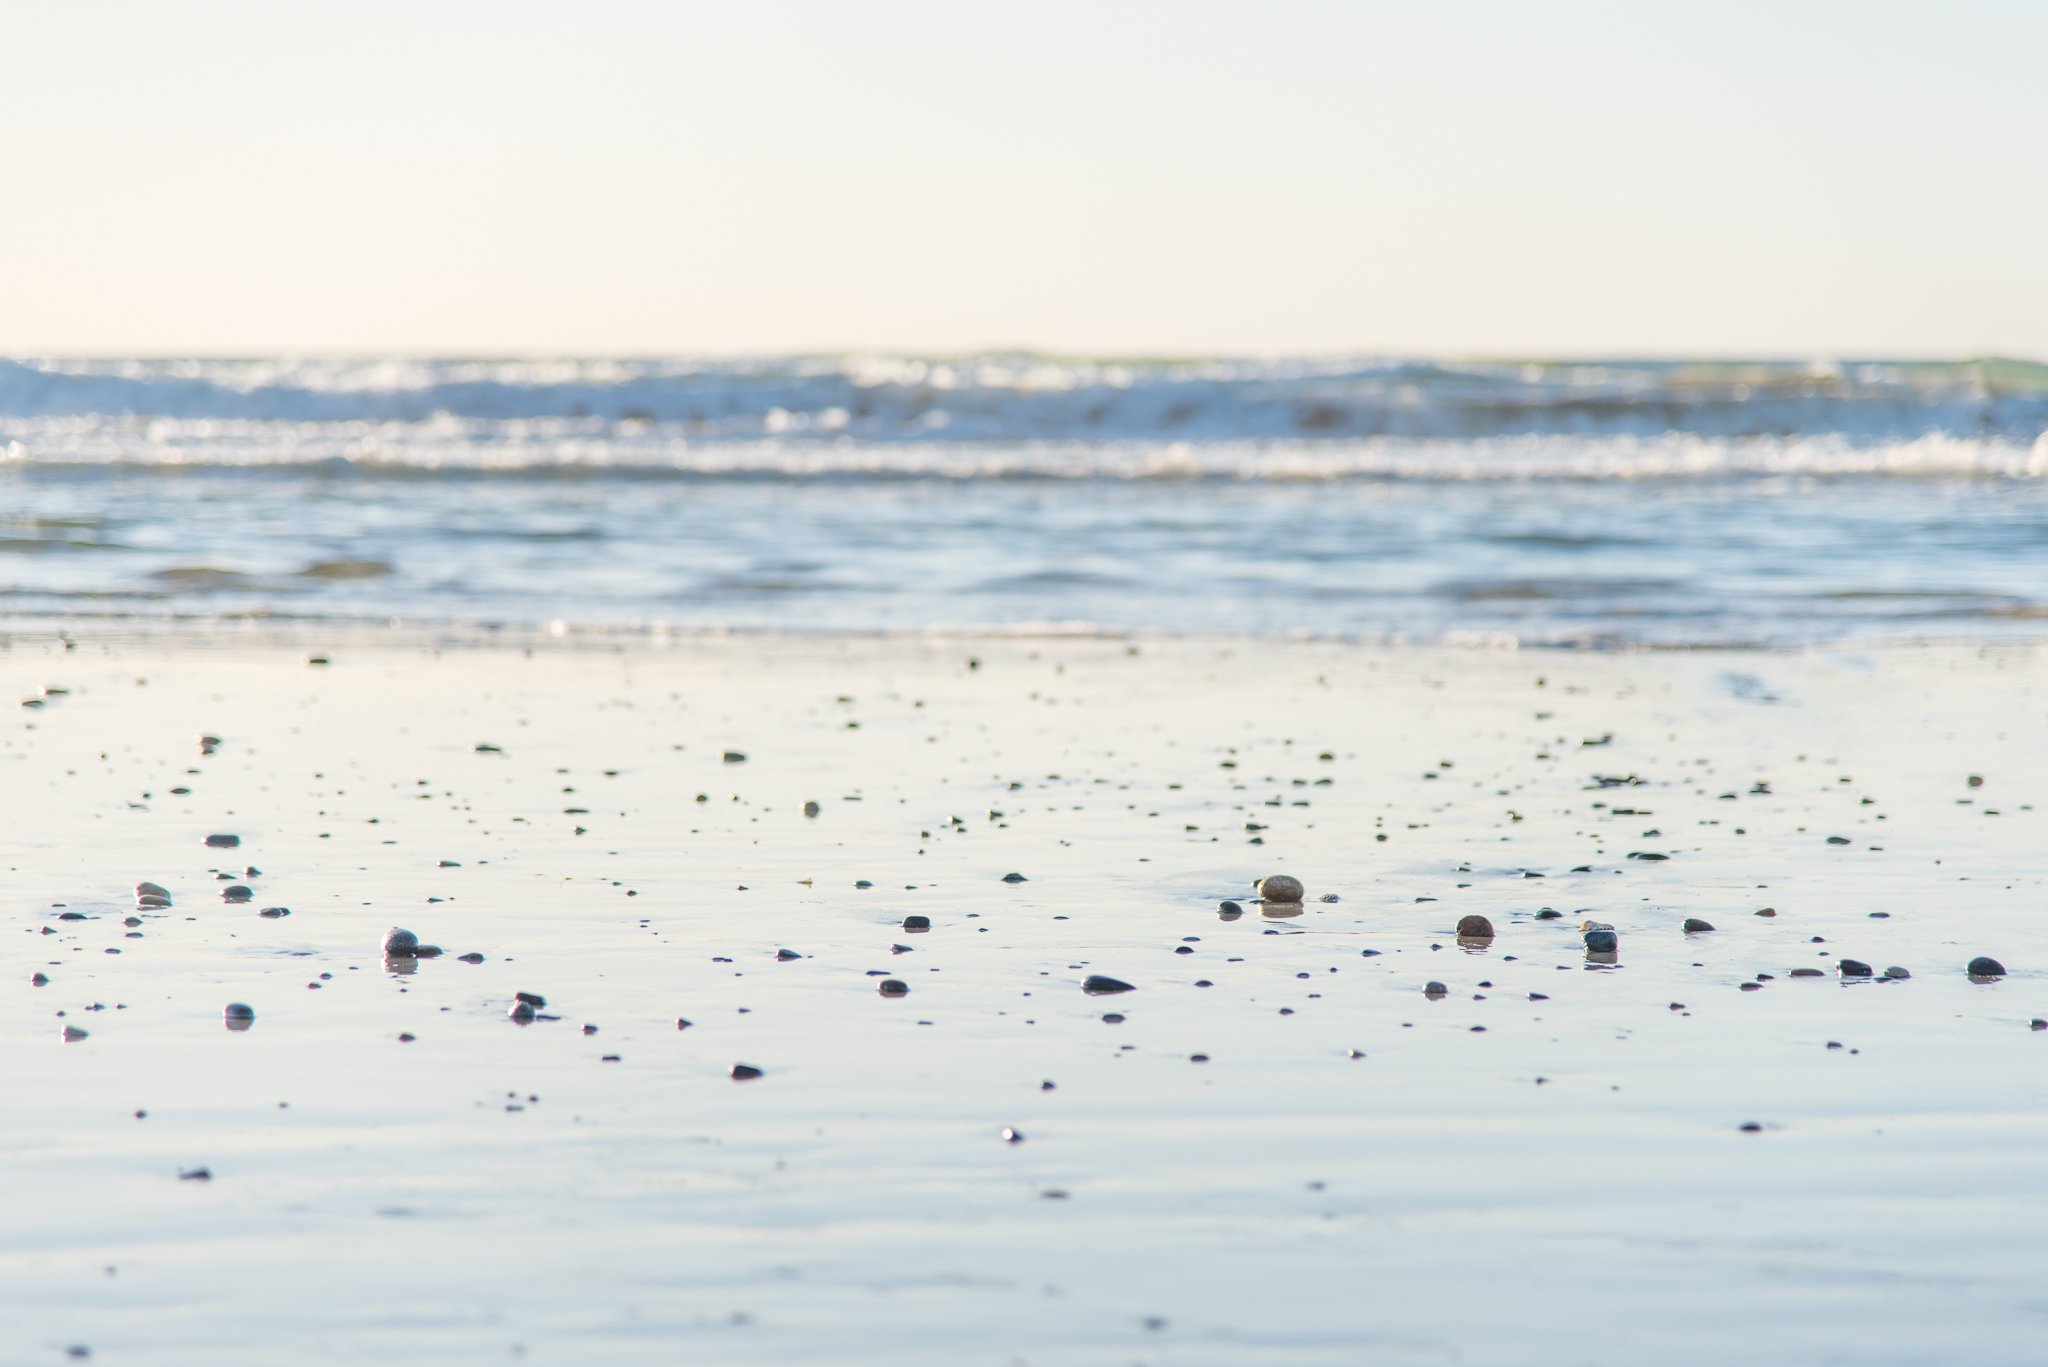 Kingwood photographer - calming image of stones on San Diego beach